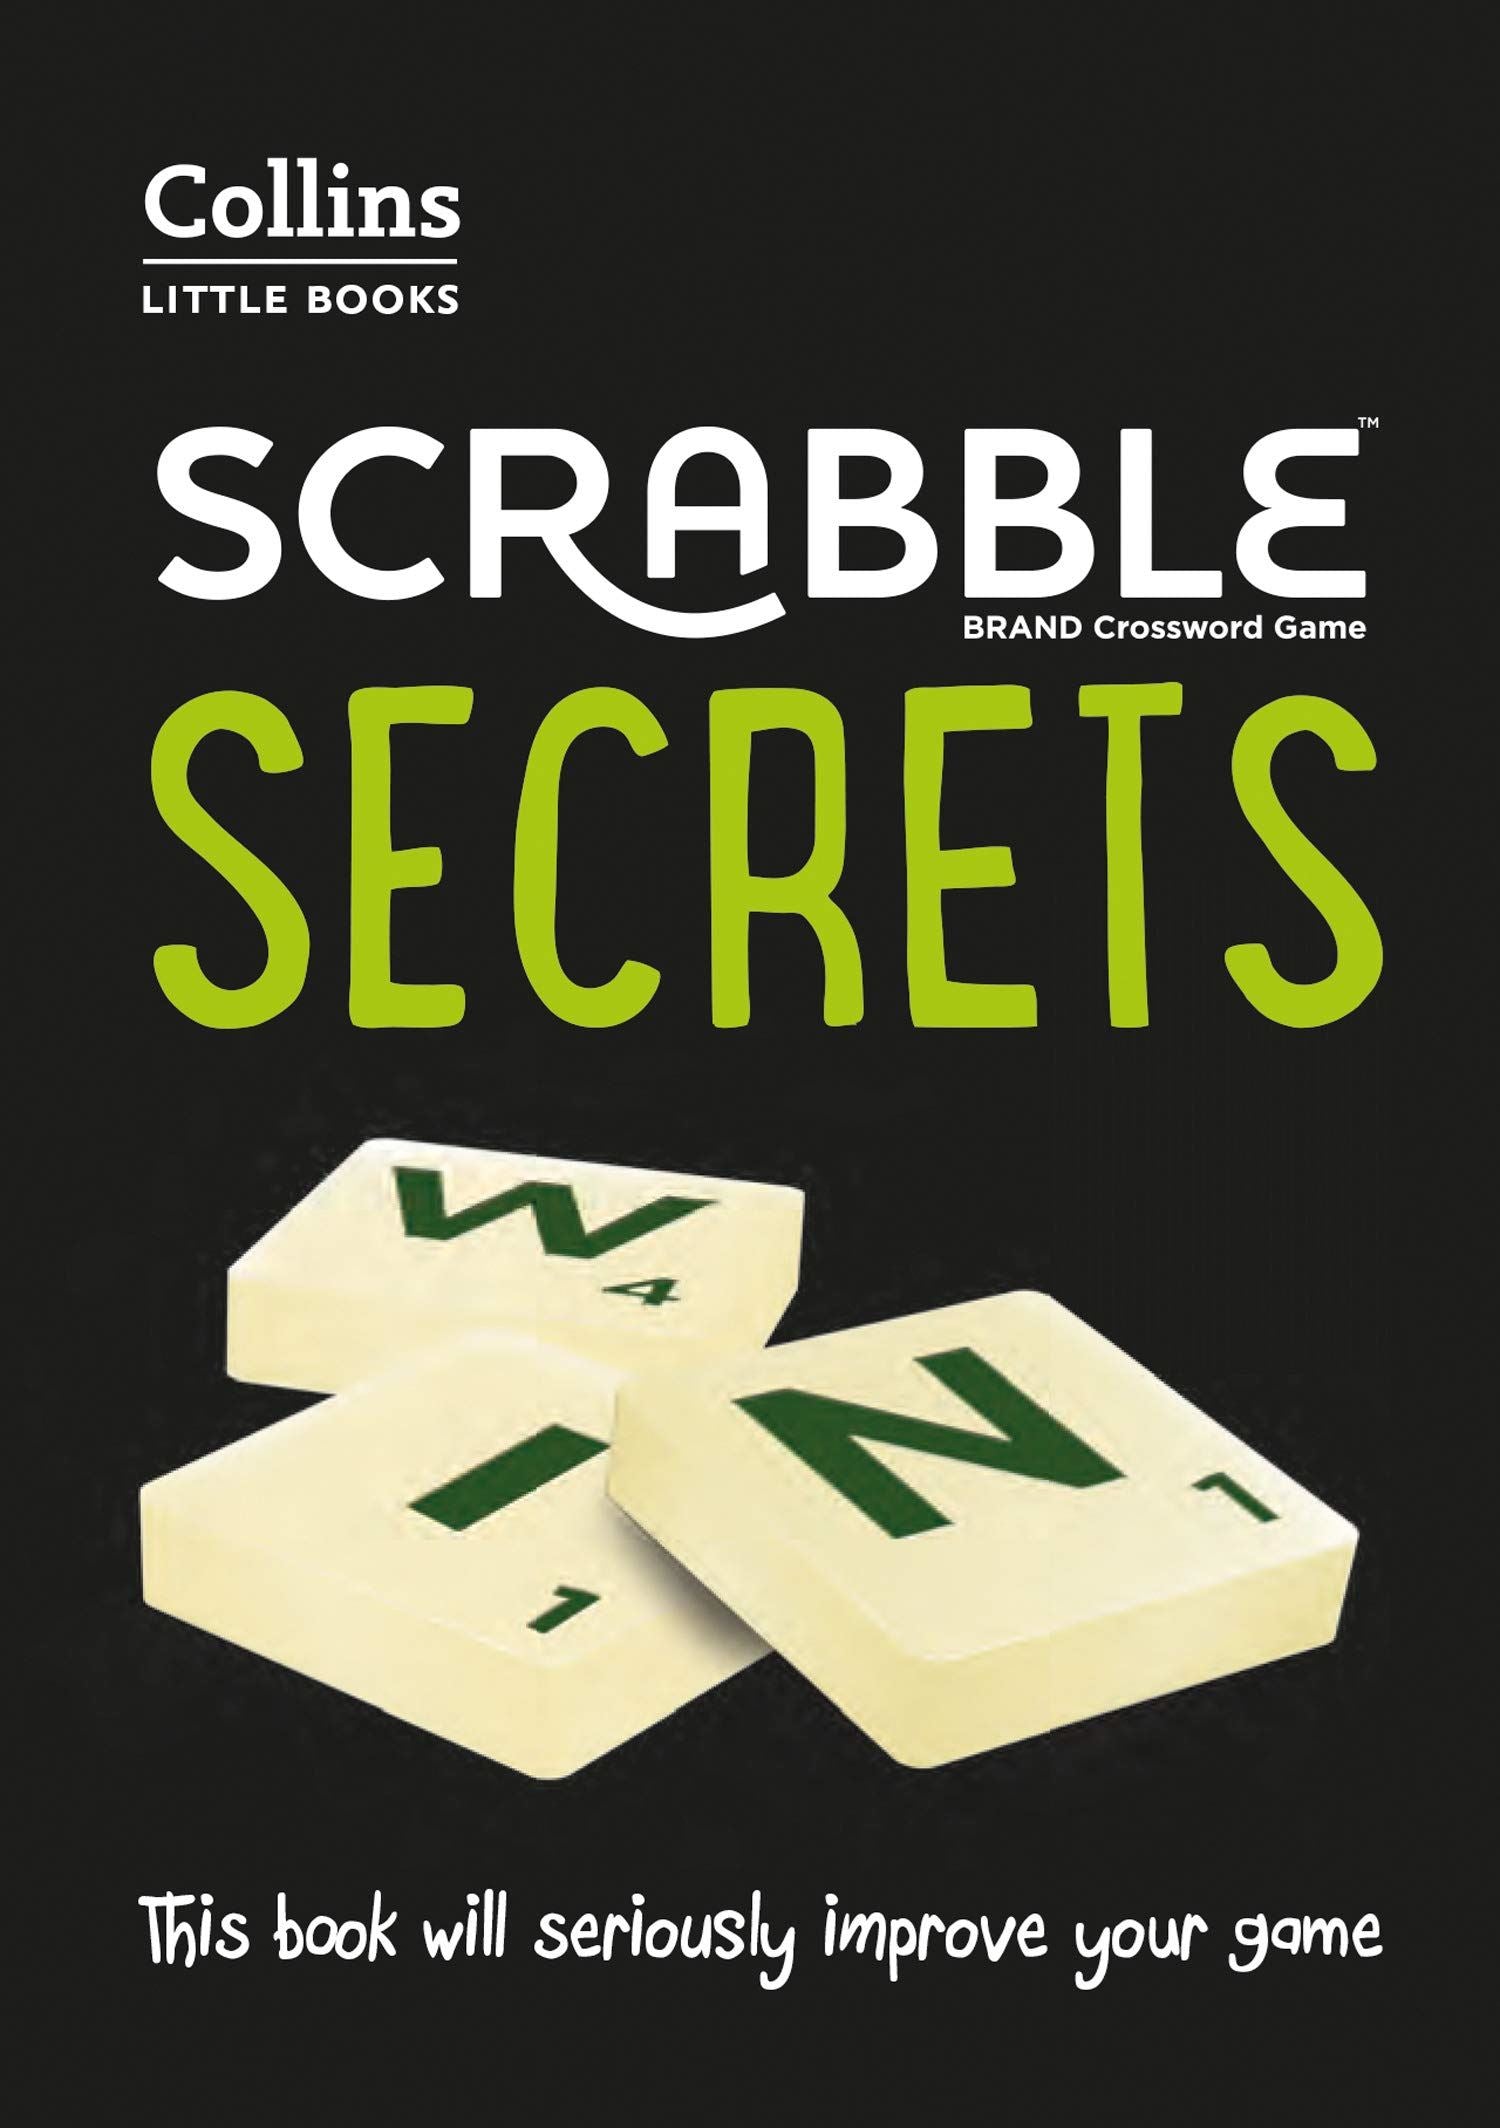 Collins Little Books Scrabble Secrets by Weirs of Baggot St